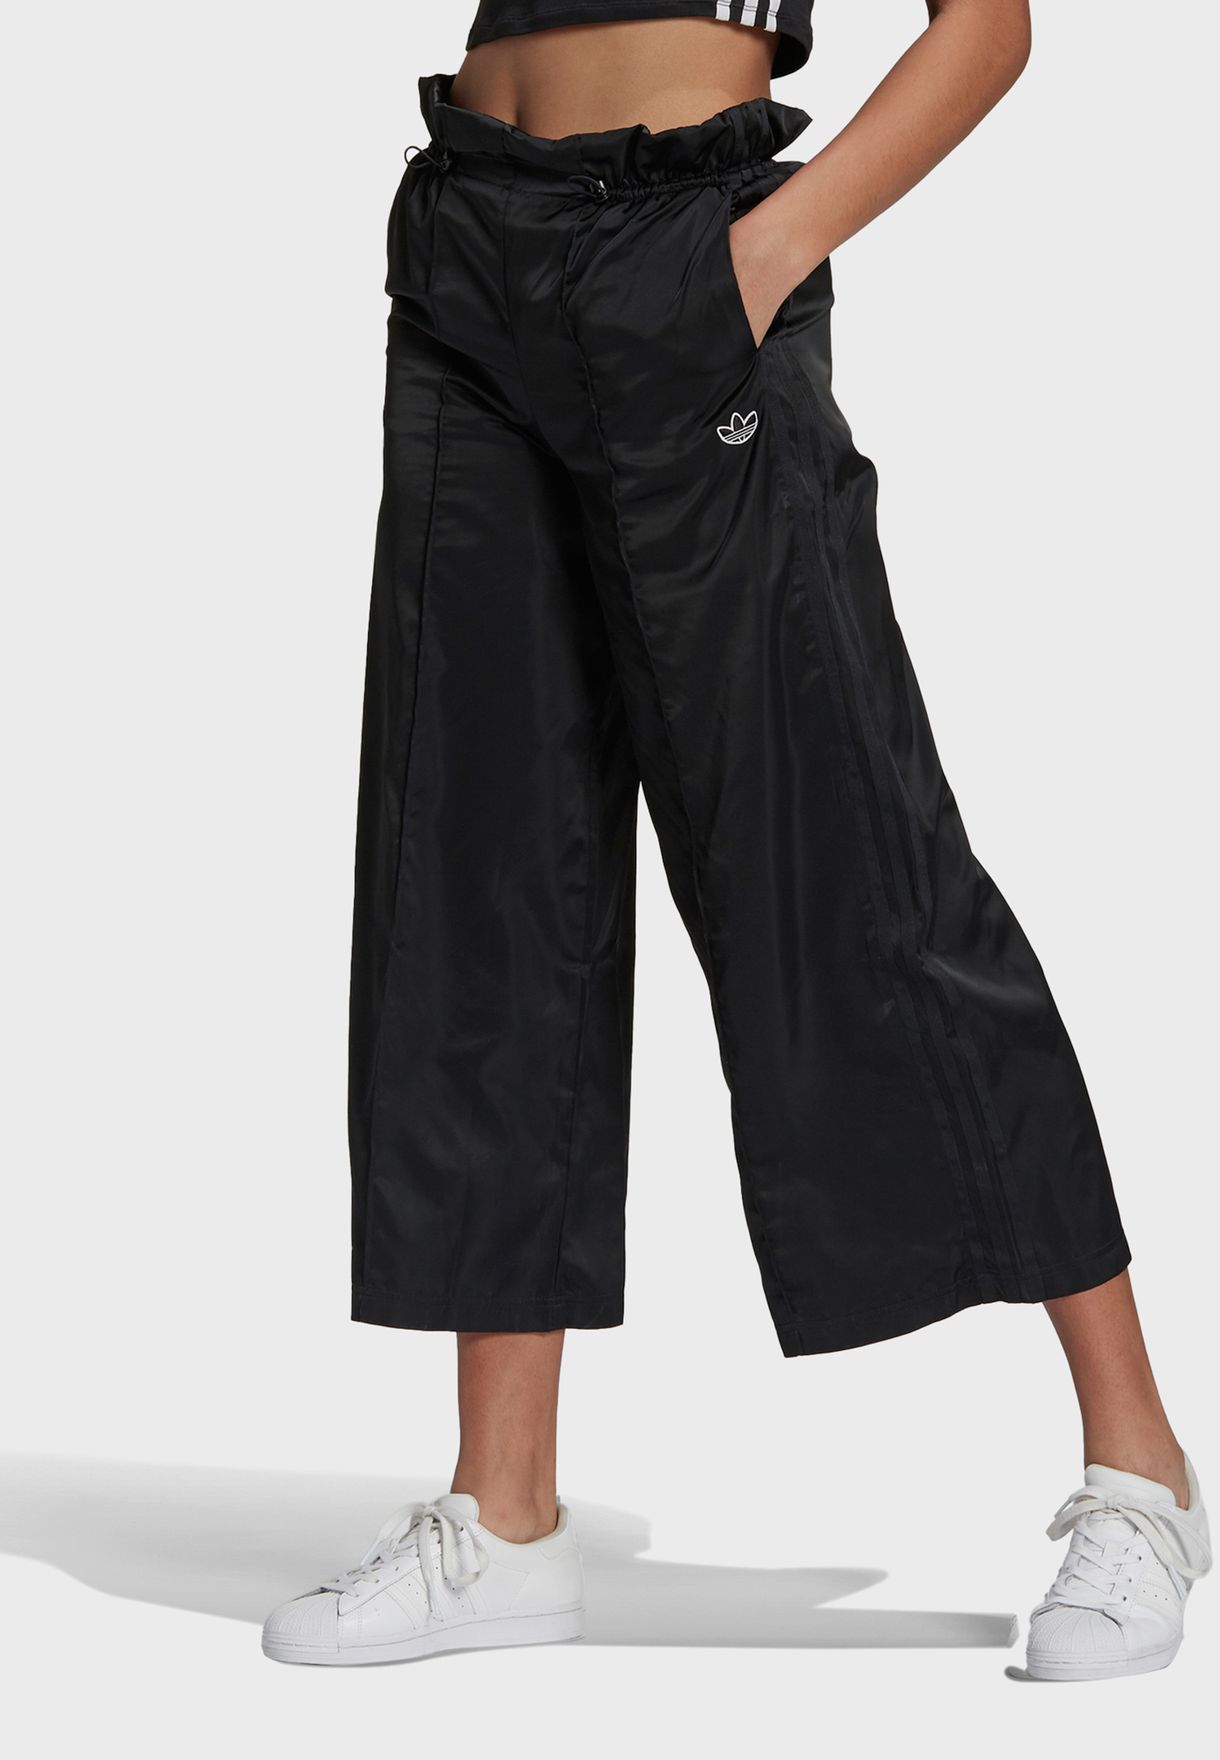 Buy Adidas Originals Black Trefoil 7 8 Track Pants For Women In Mena Worldwide Gn3110